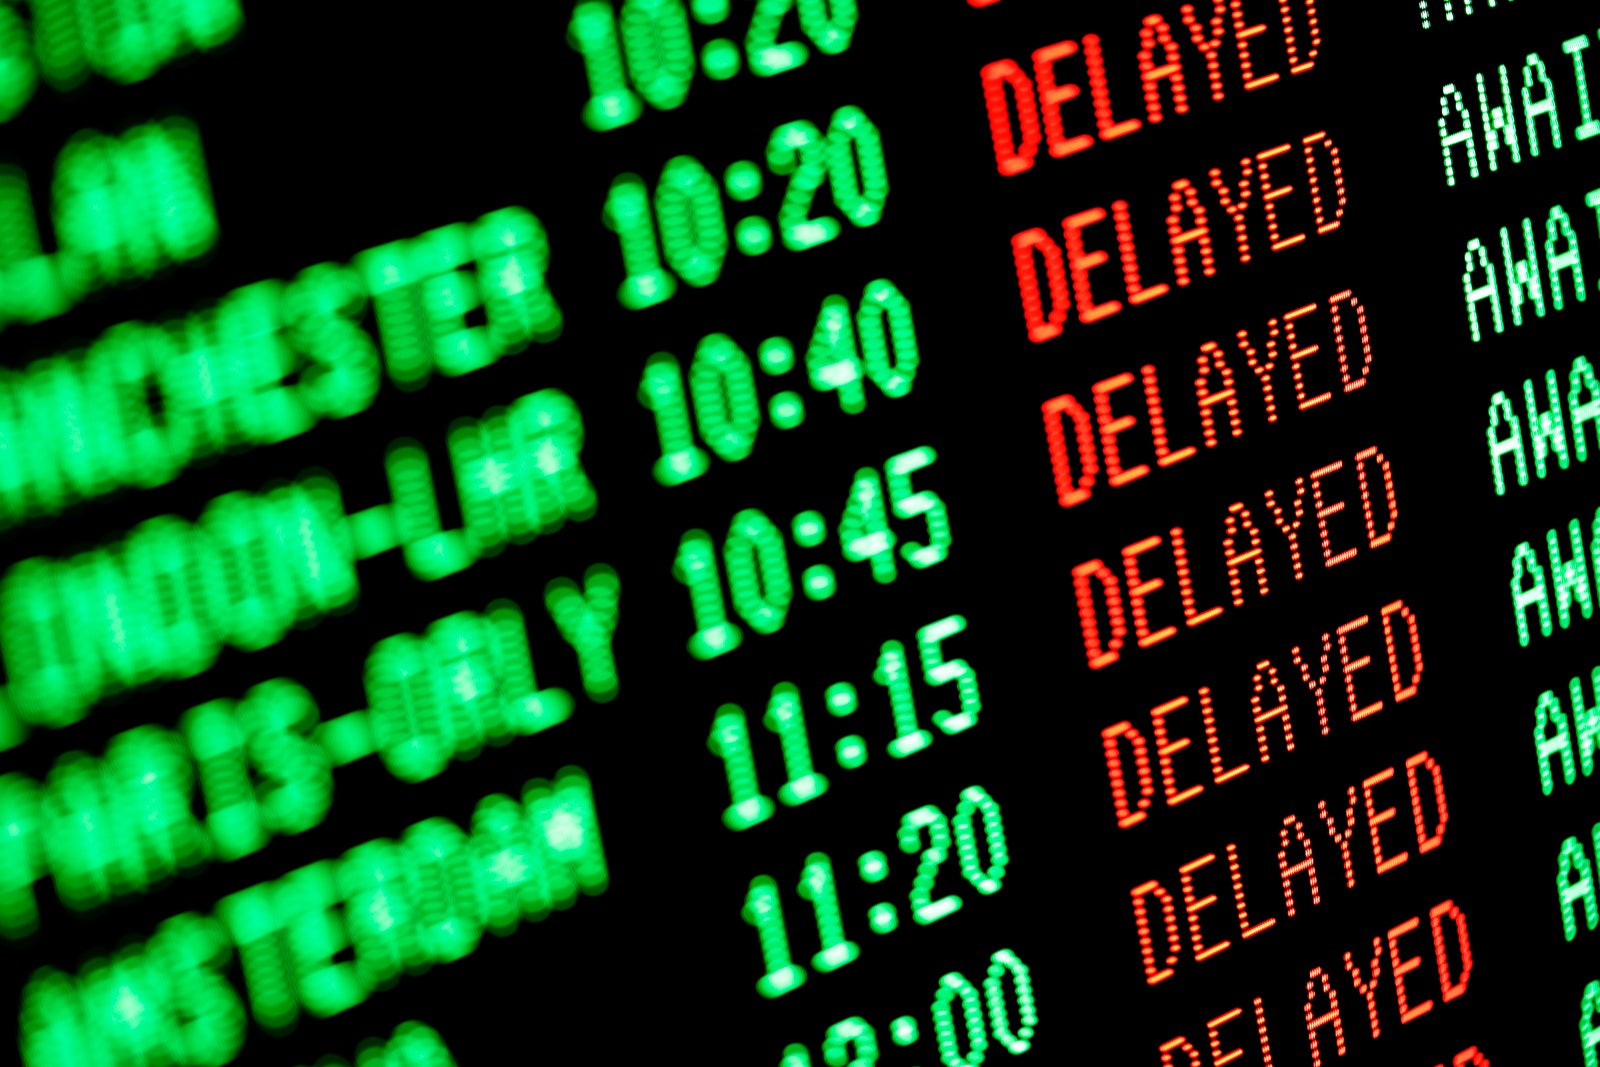 flight delays - delayed departures / arrivals screen